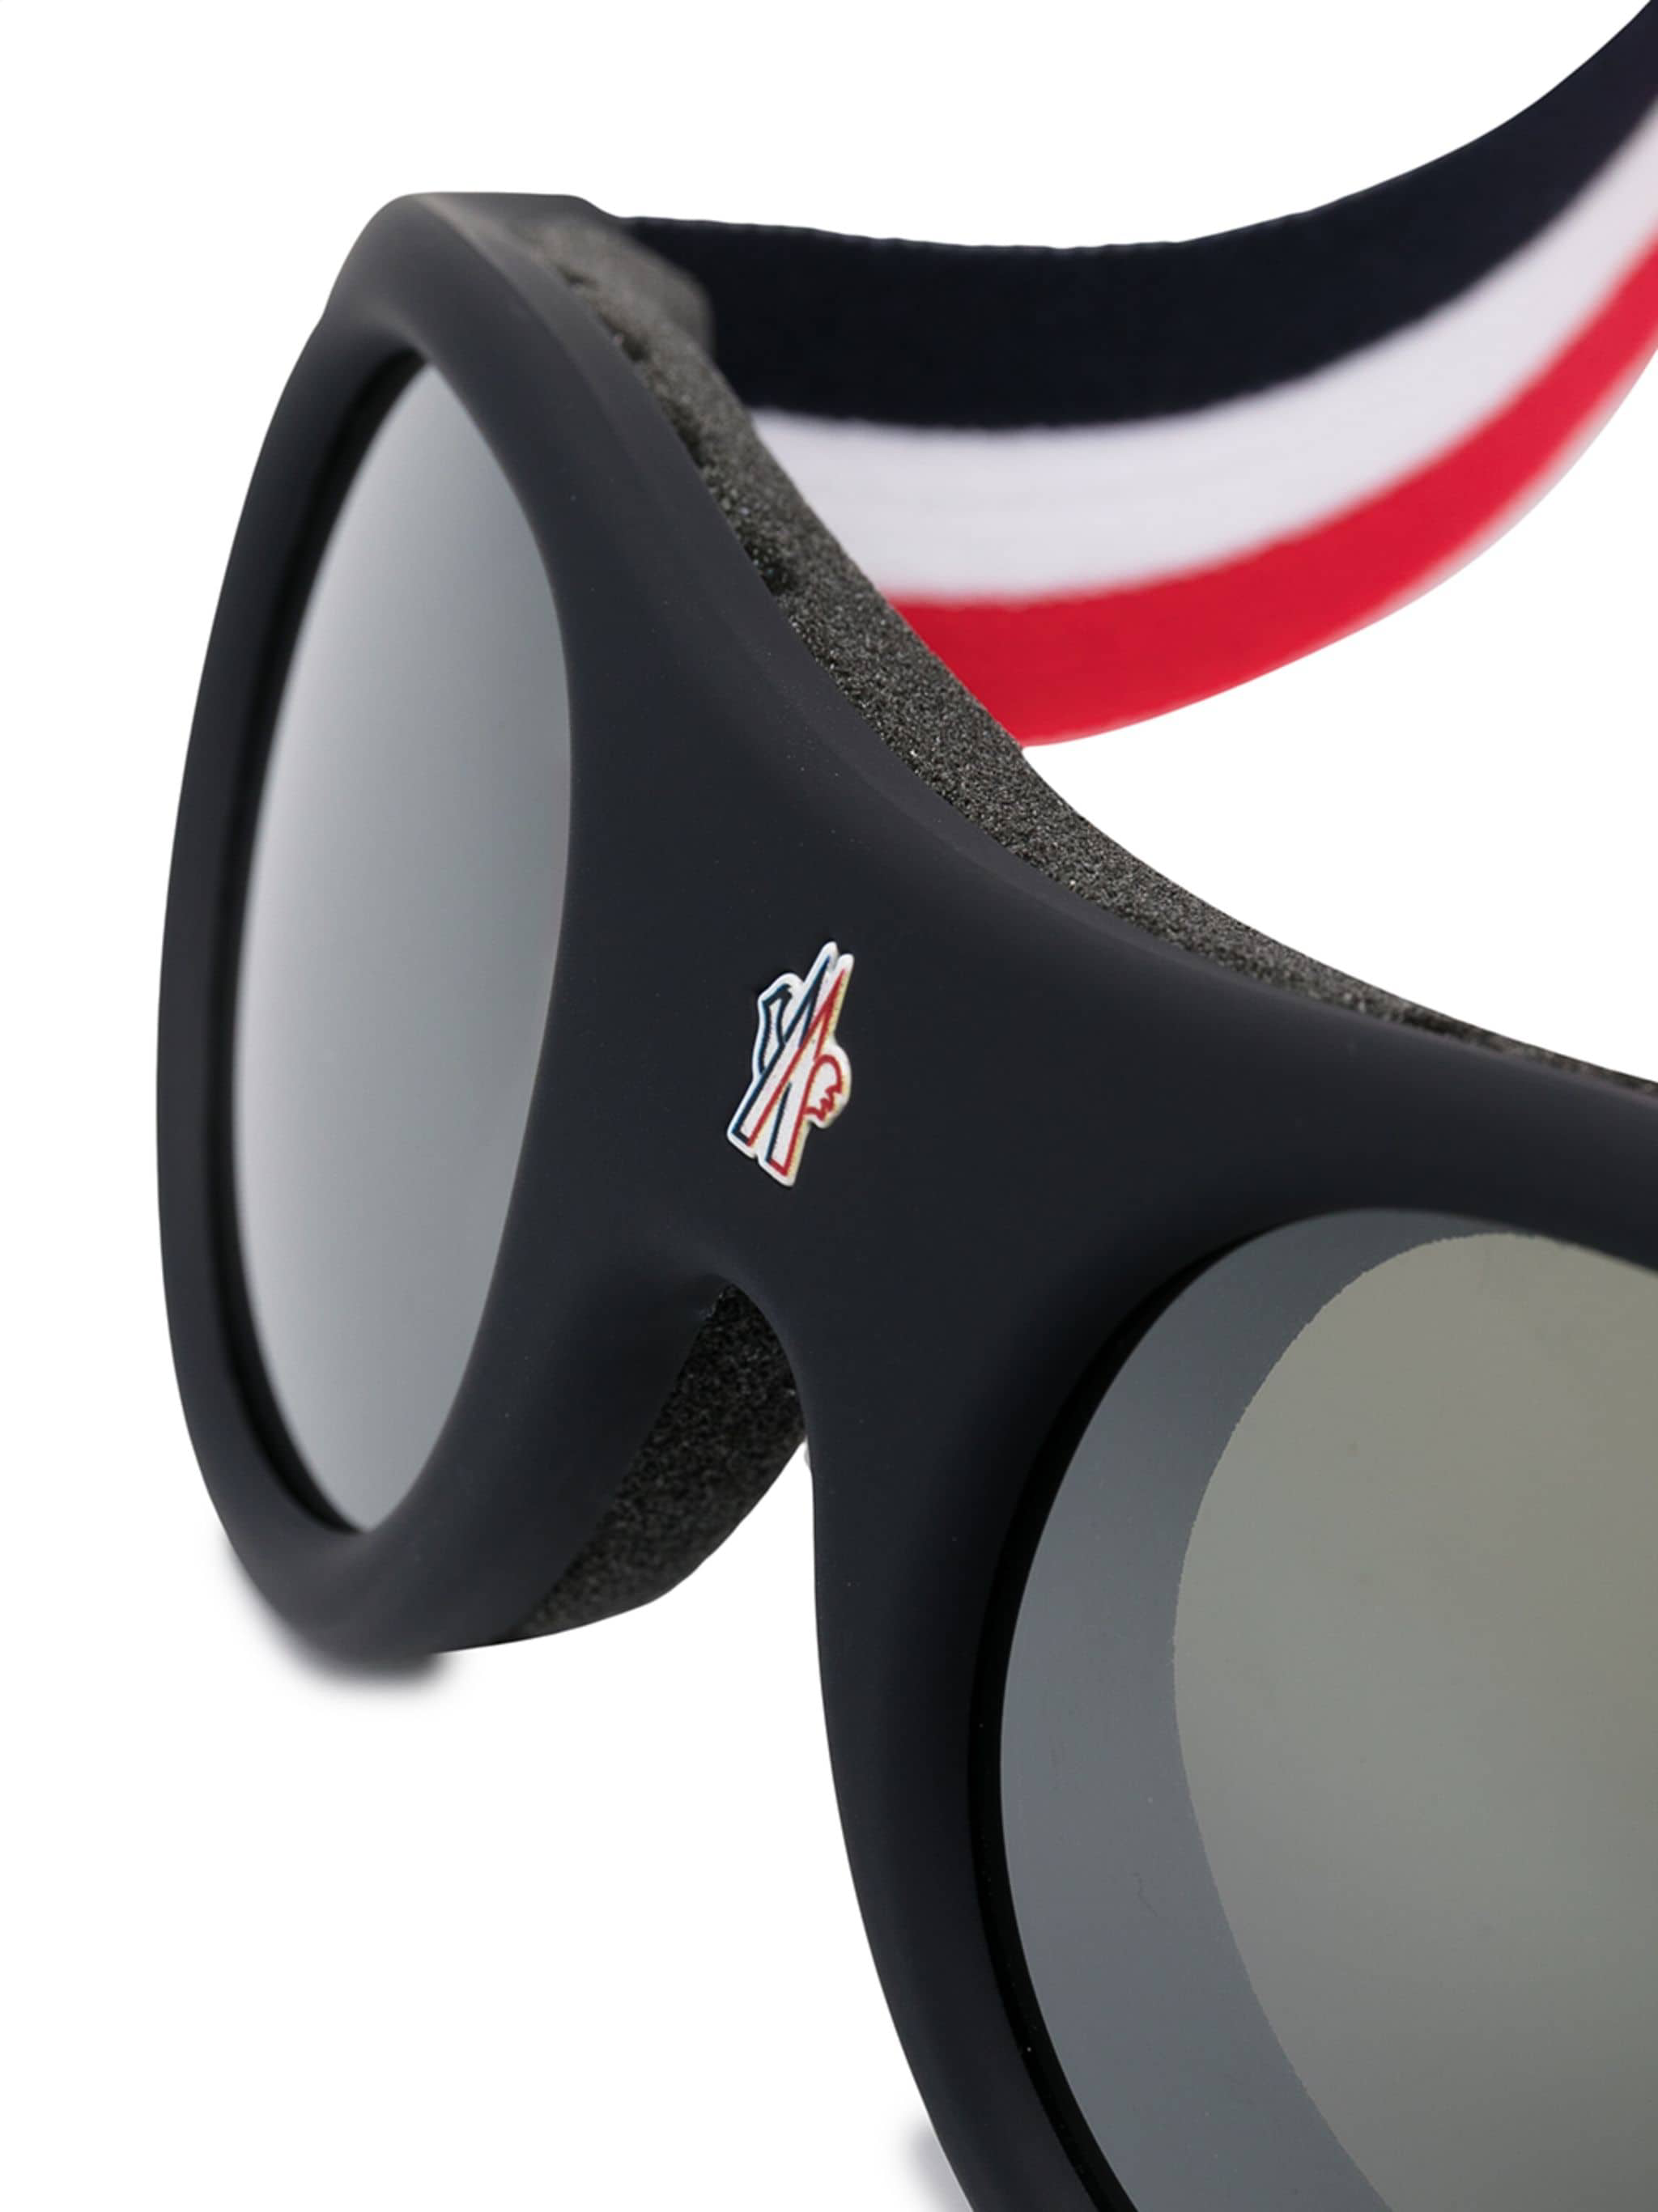 Moncler Sunglasses Moncler Goggle ML0051 92C 55mm Sunglasses Eyeglasses Eyewear UK USA Australia 